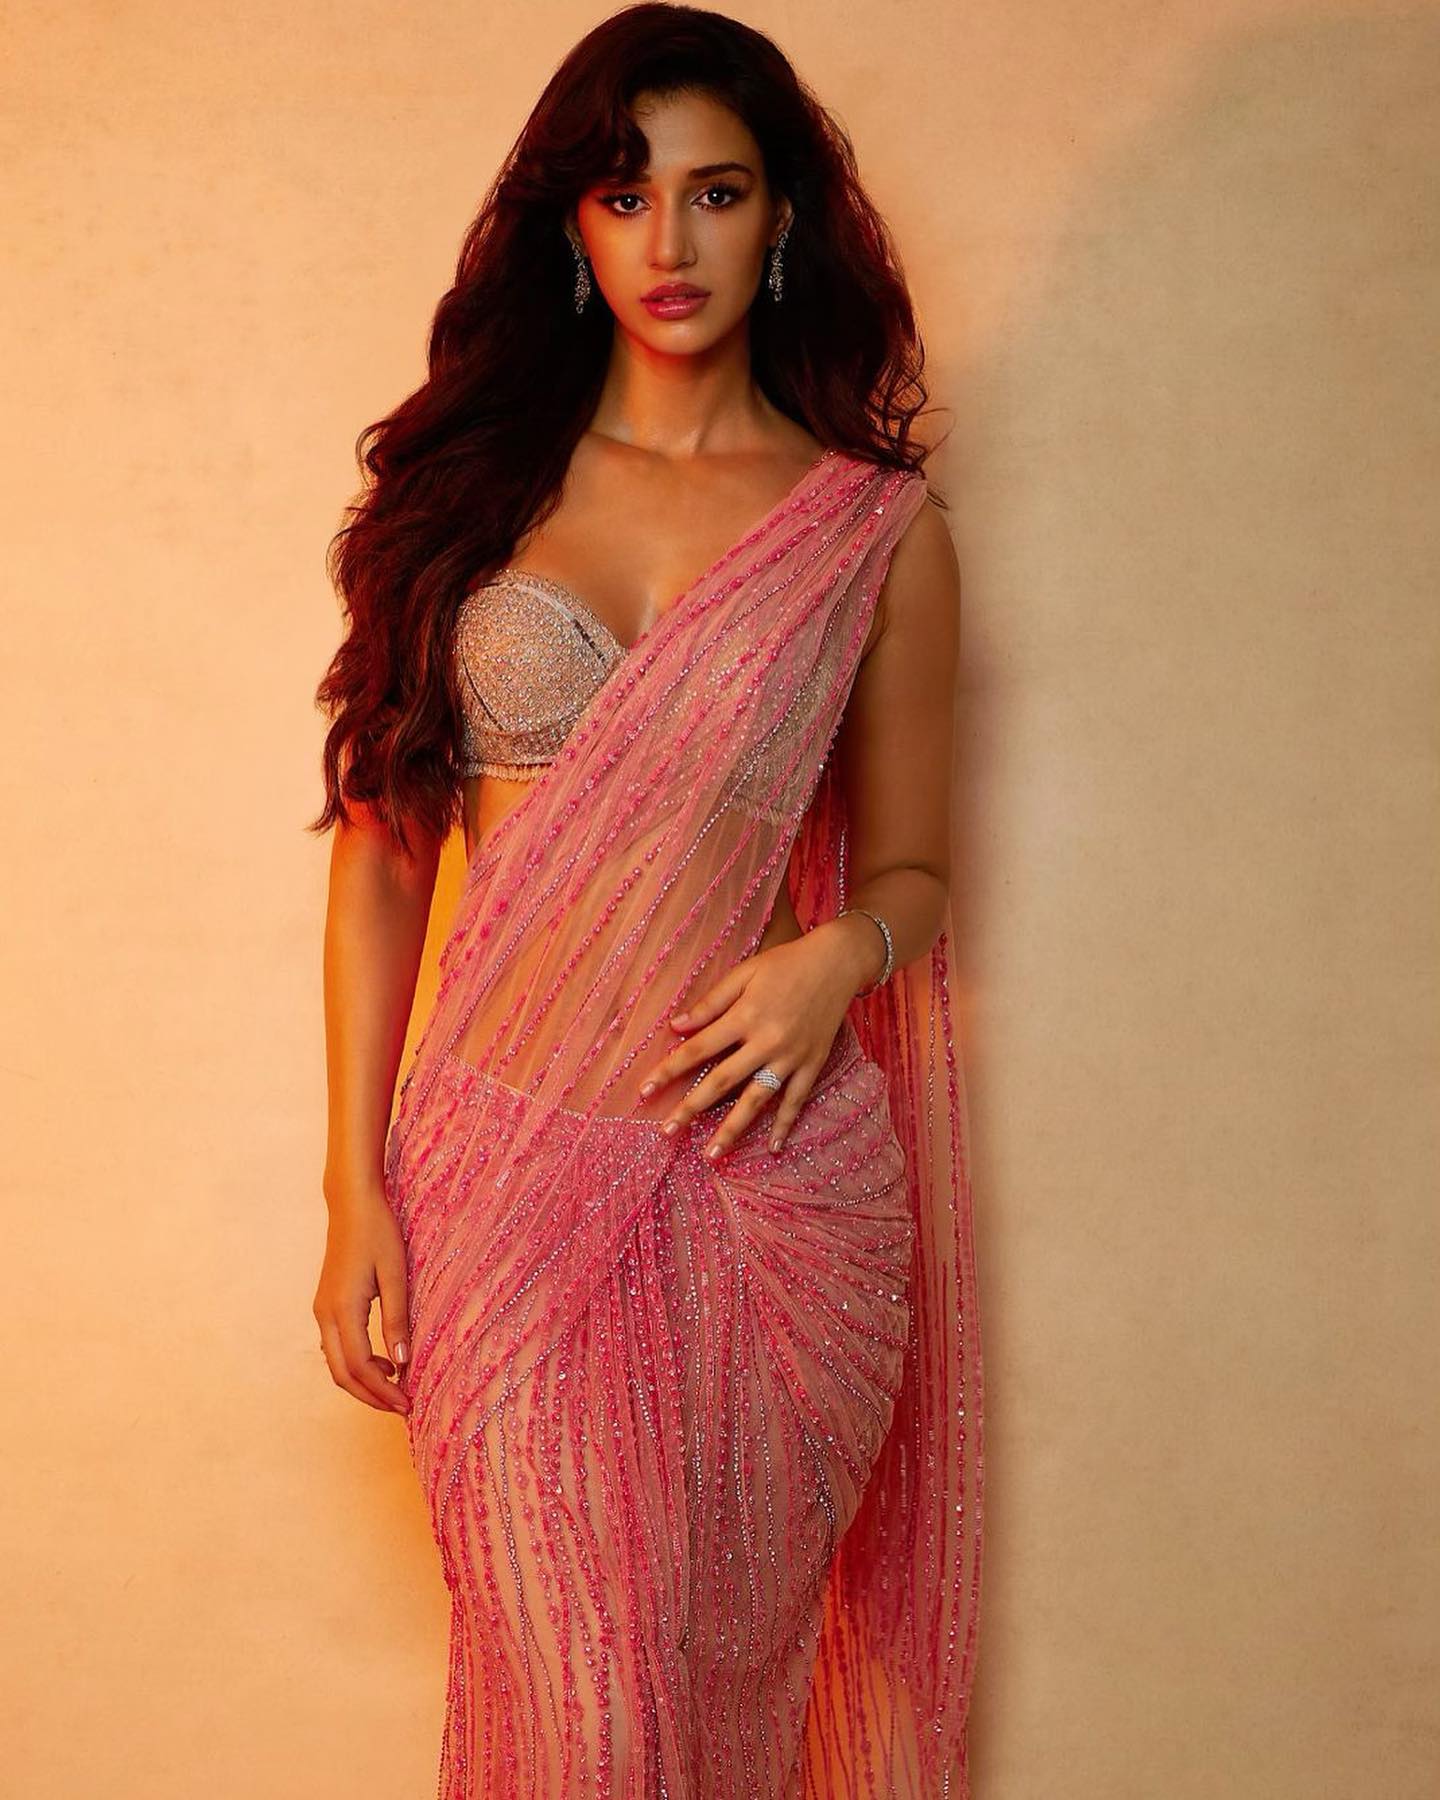 Saree Poses for Women: Saree poses for photoshoot at home check alia bhatt  saree looks | Times Now Navbharat